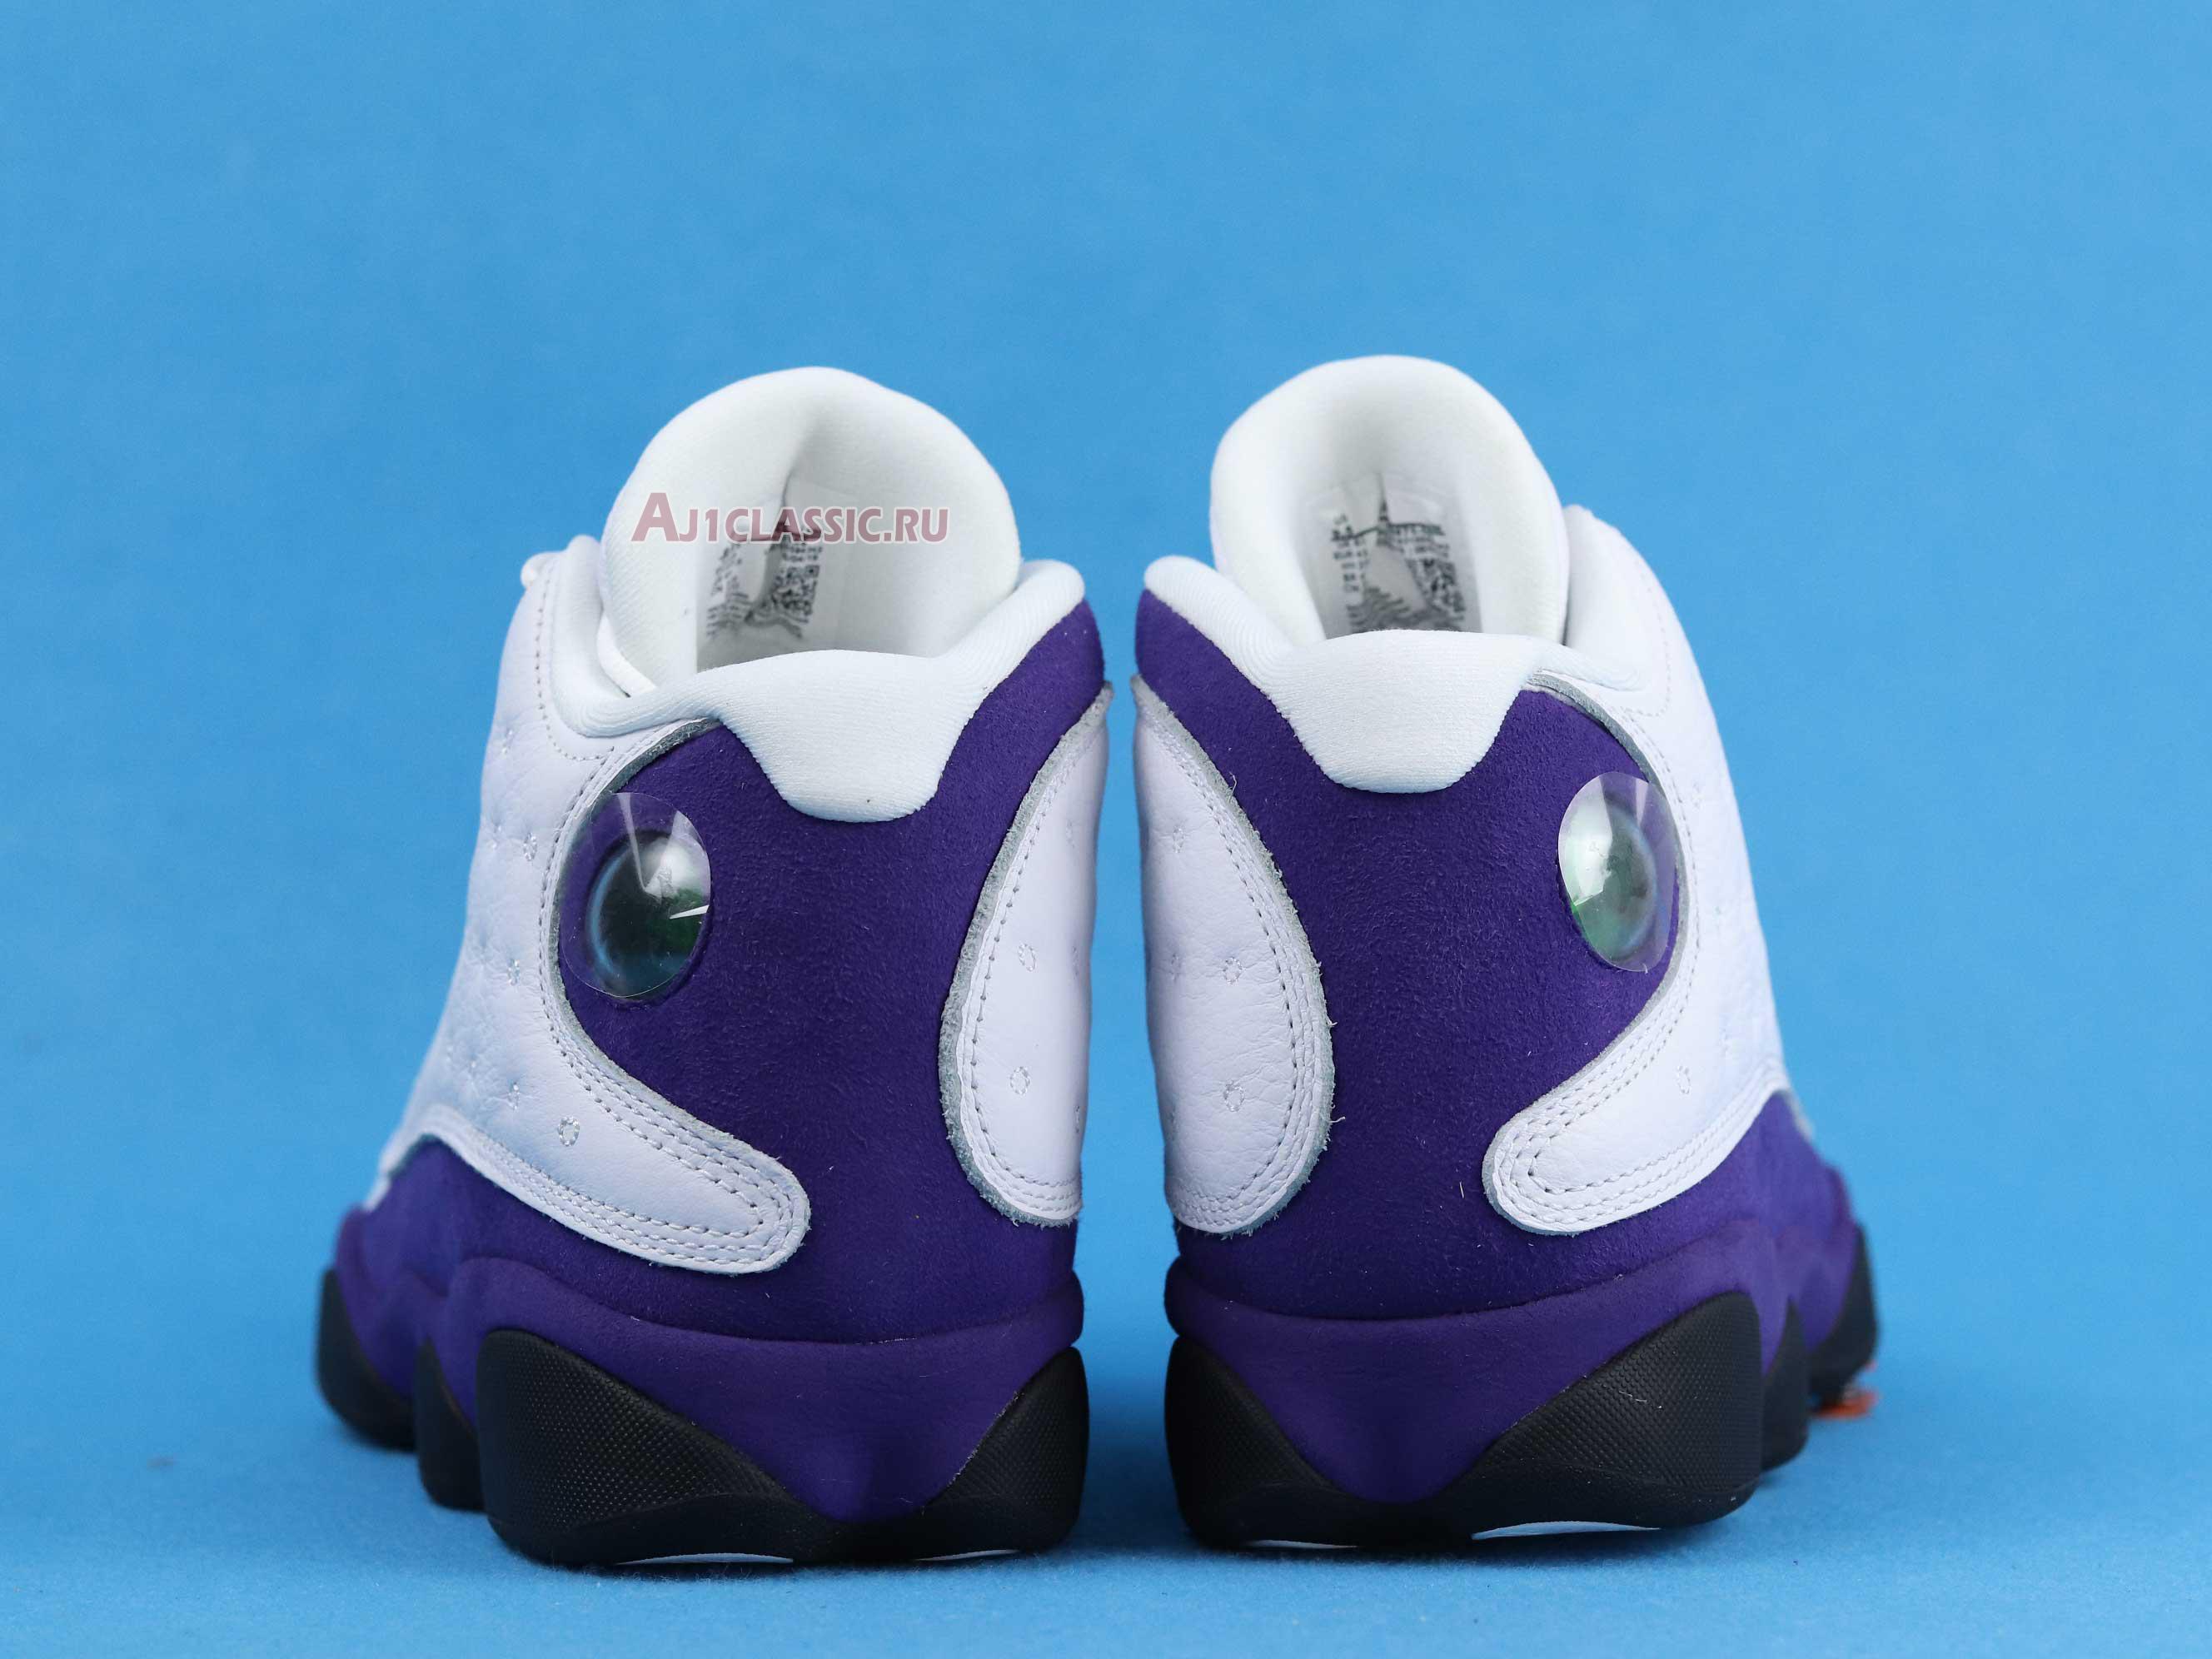 Air Jordan 13 Retro "Lakers" 414571-105